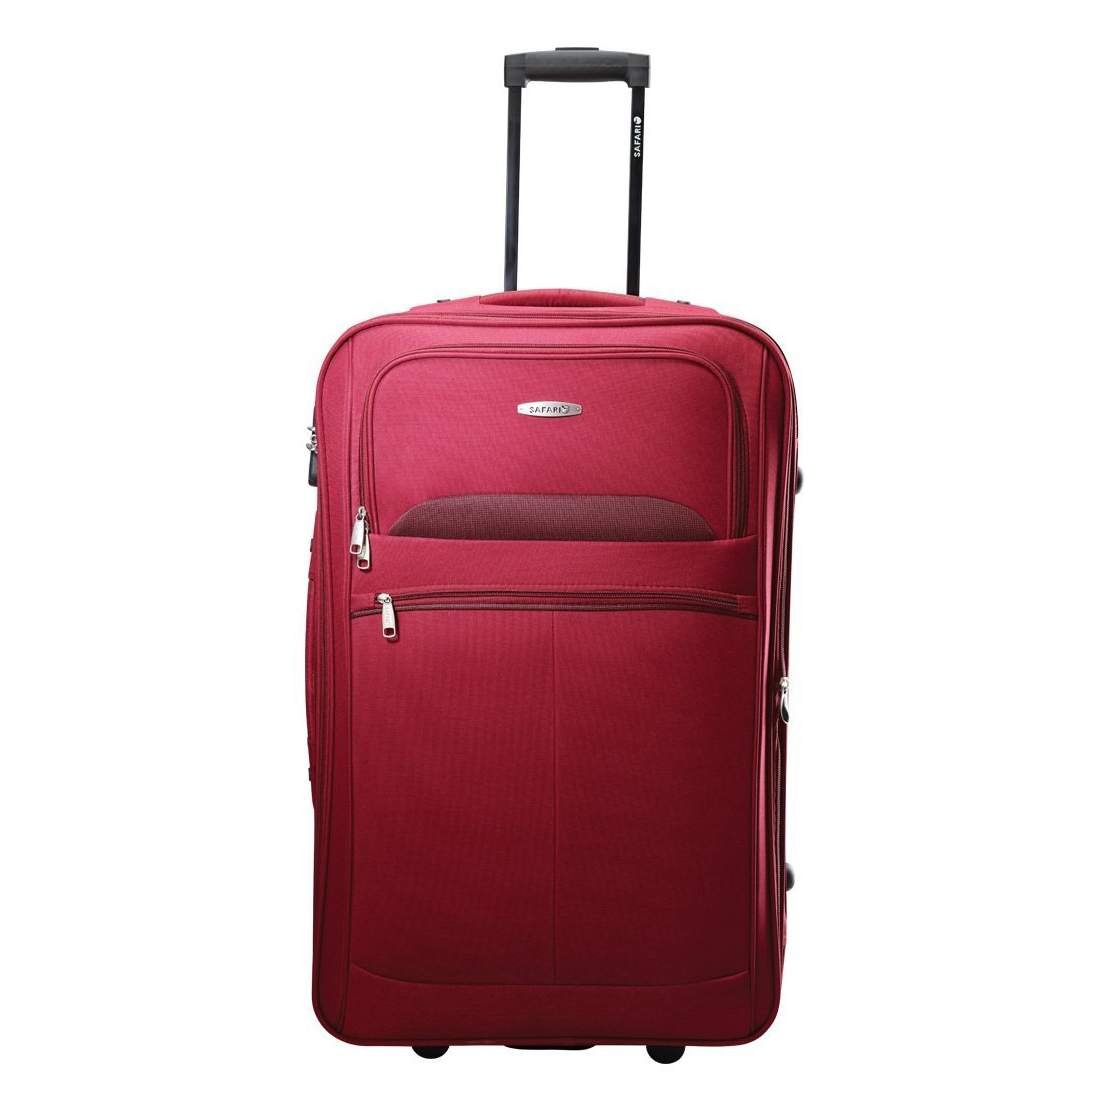 aristocrat sonata plus59 58x39x29cm color grey luggage bag authorized dealer